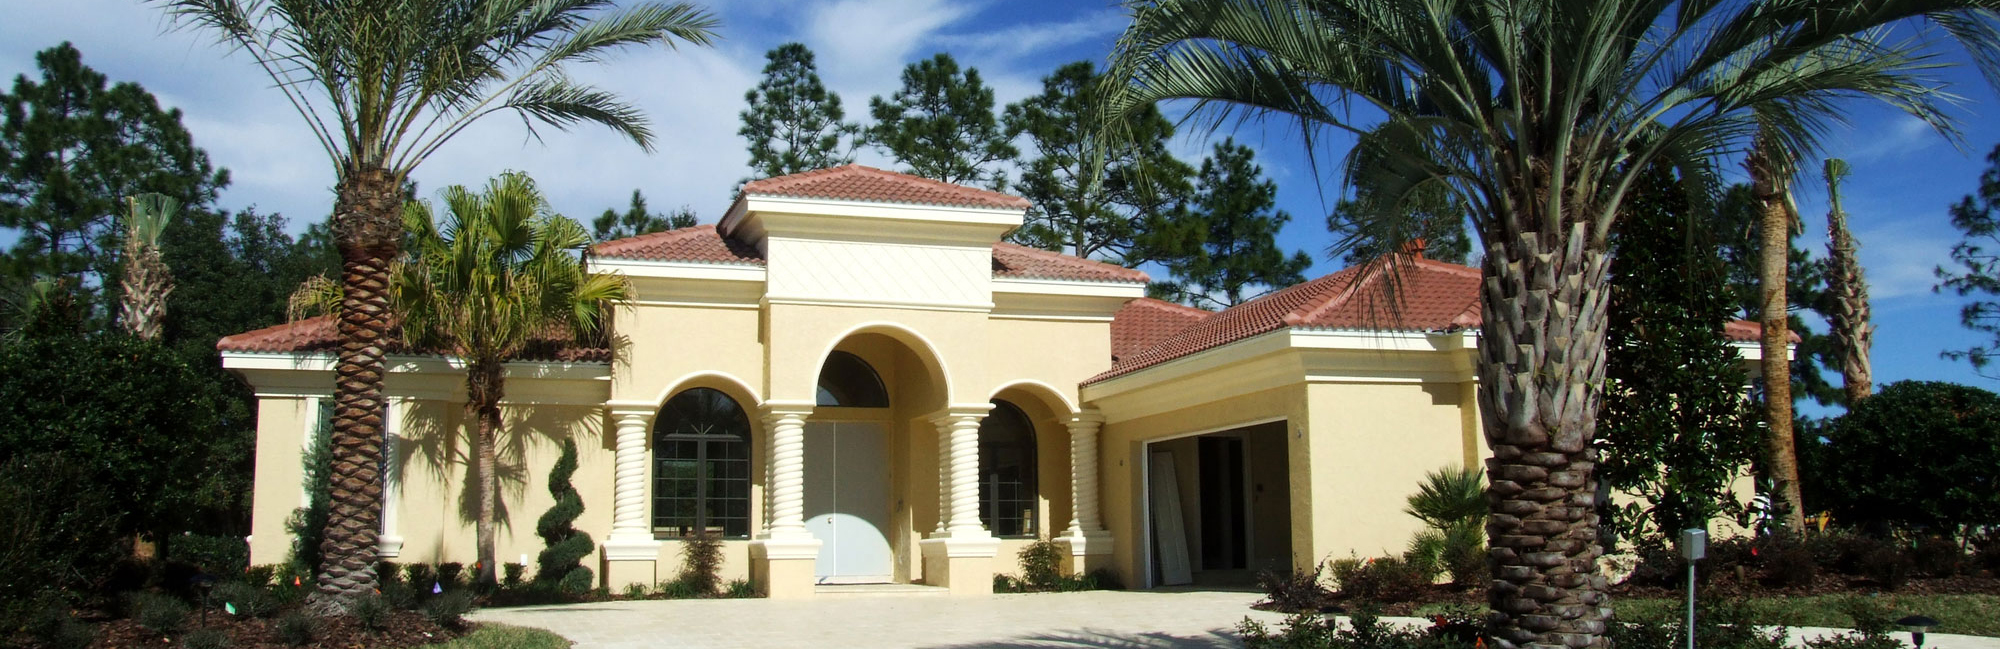 Florida Luxury Home